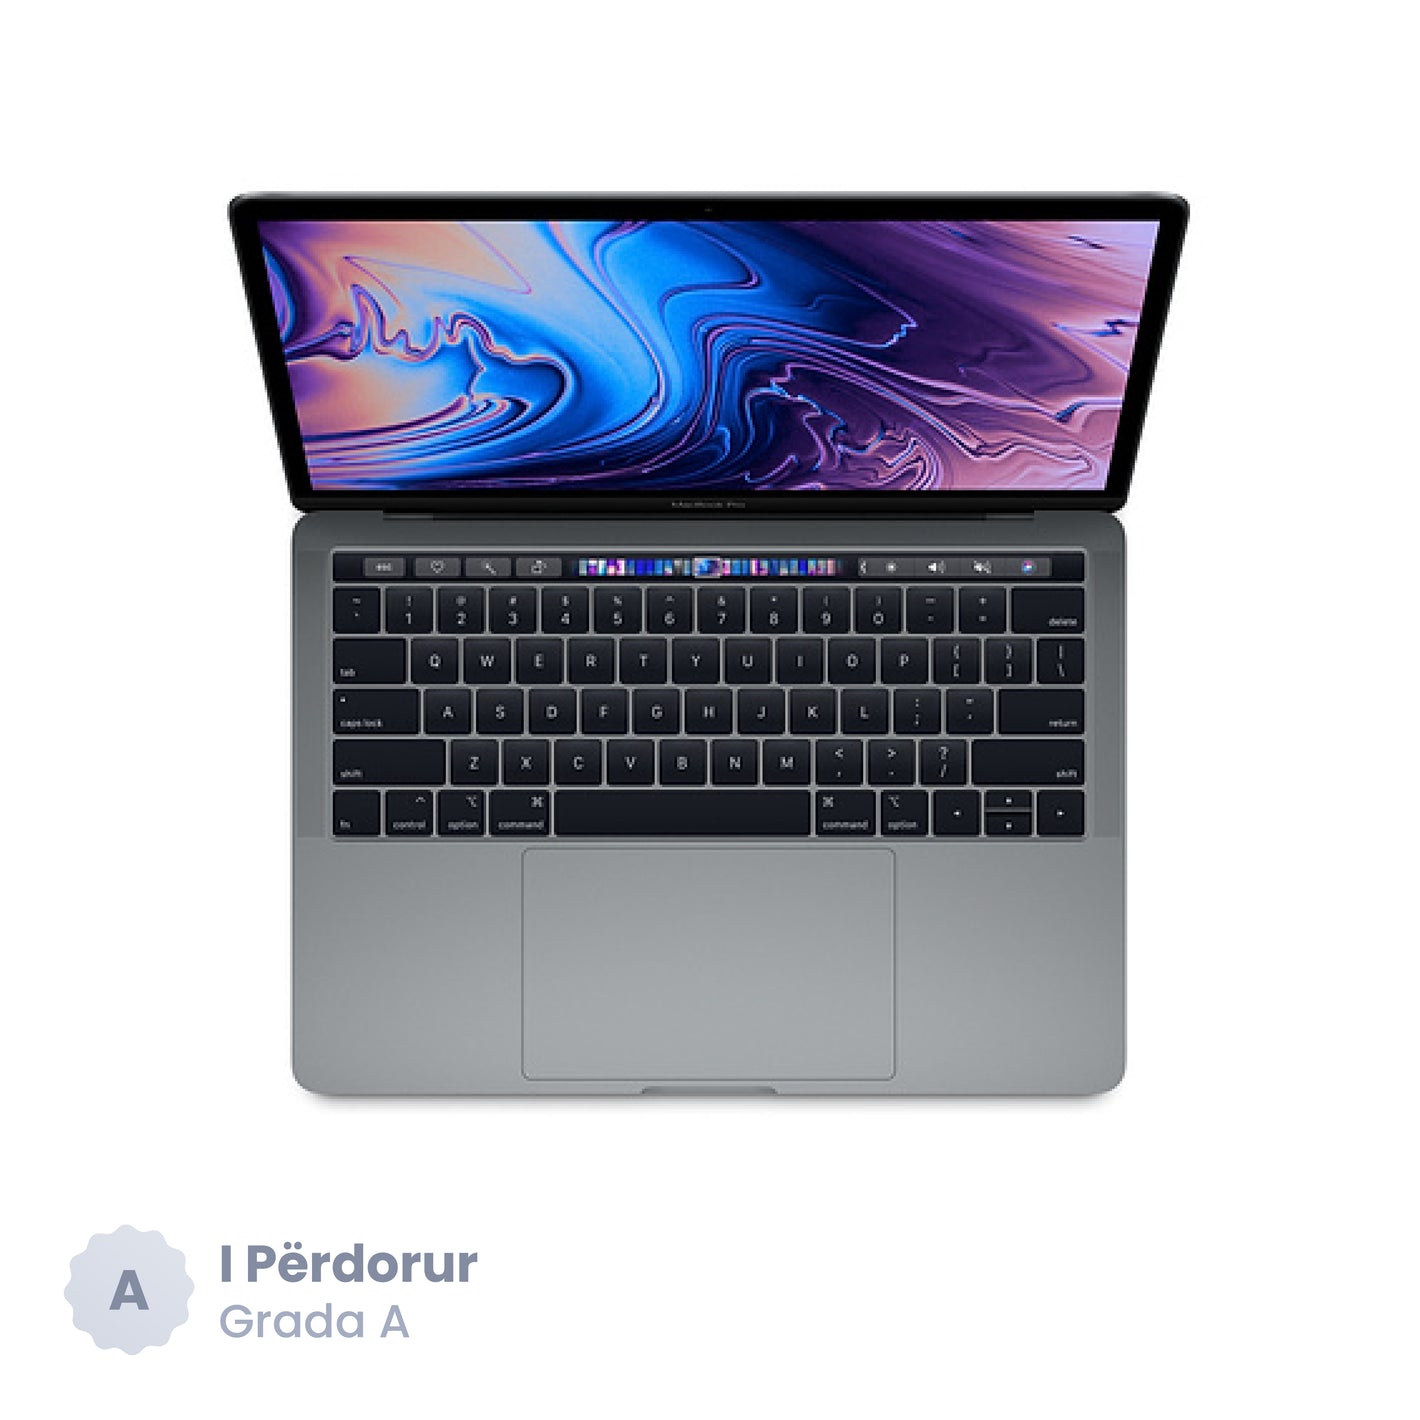 Laptop Apple MacBook Pro (13-inch, 2018, Four Thunderbolt 3 Ports) TouchBar, Intel Core i7, 16GB Ram, 256GB SSD (Used)